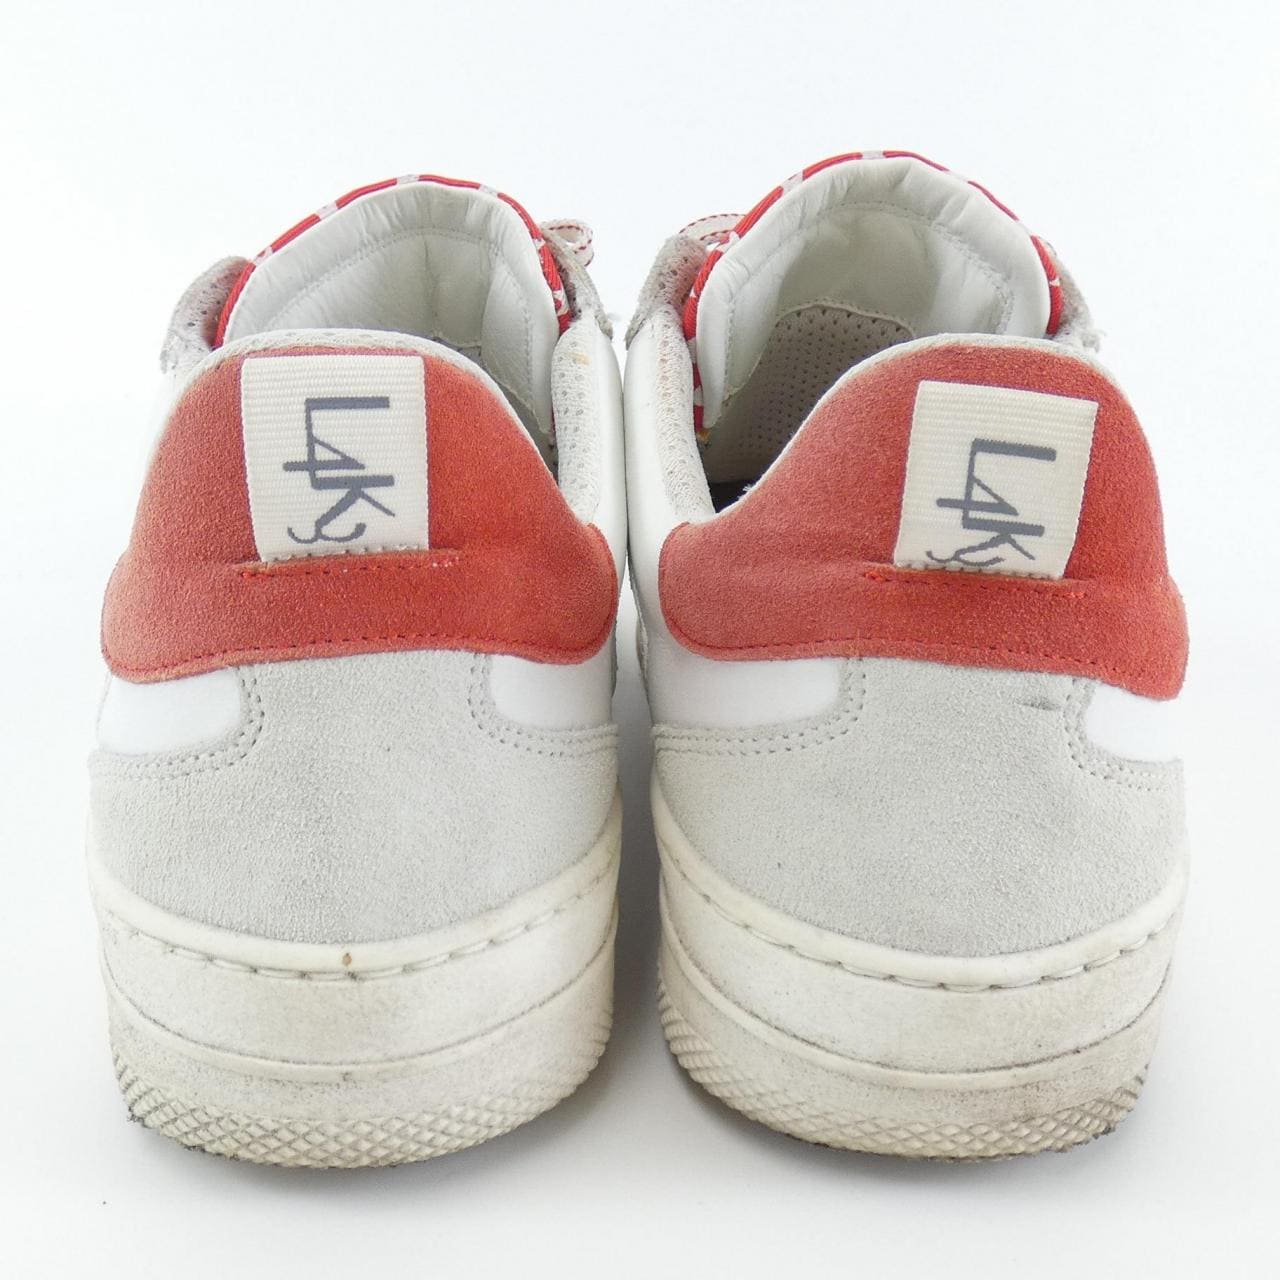 L4K3 sneakers